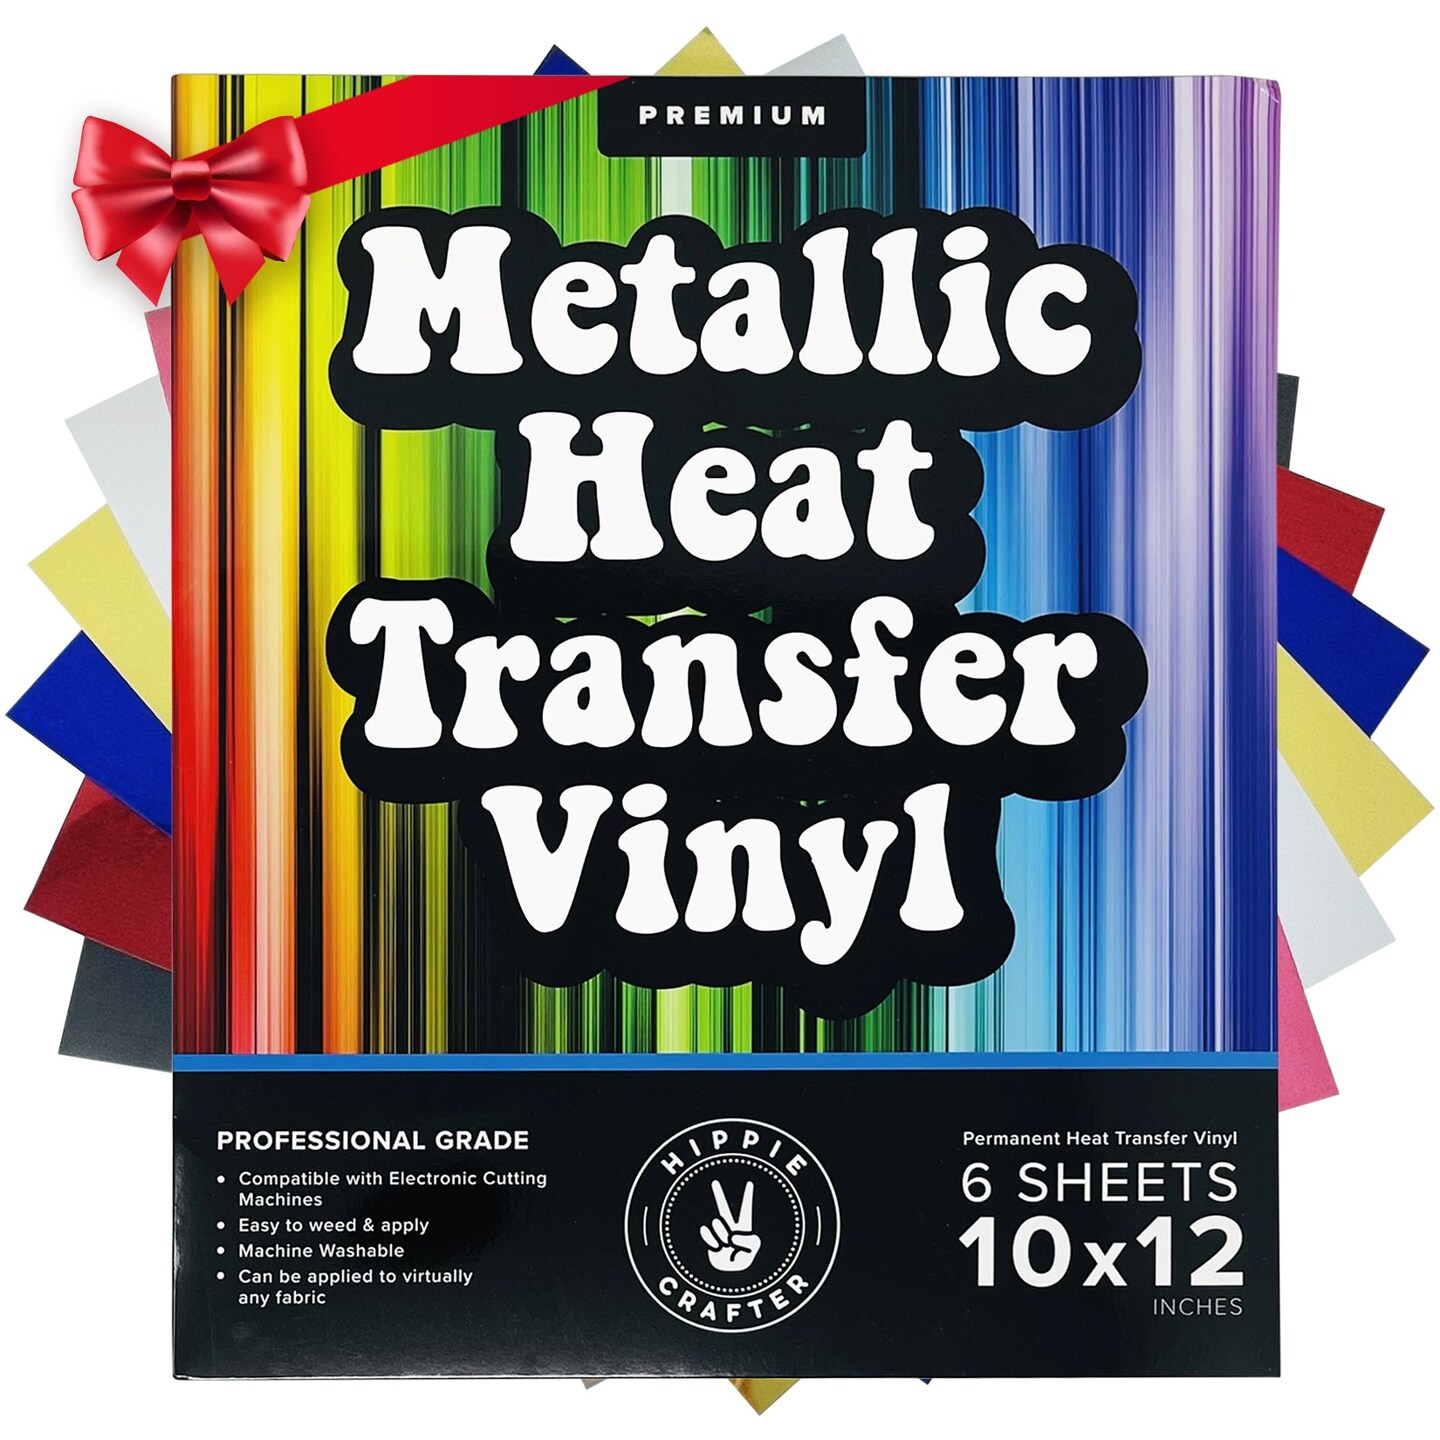 Rose Gold Series Metal Permanent Adhesive Vinyl 6 Sheets 12x10